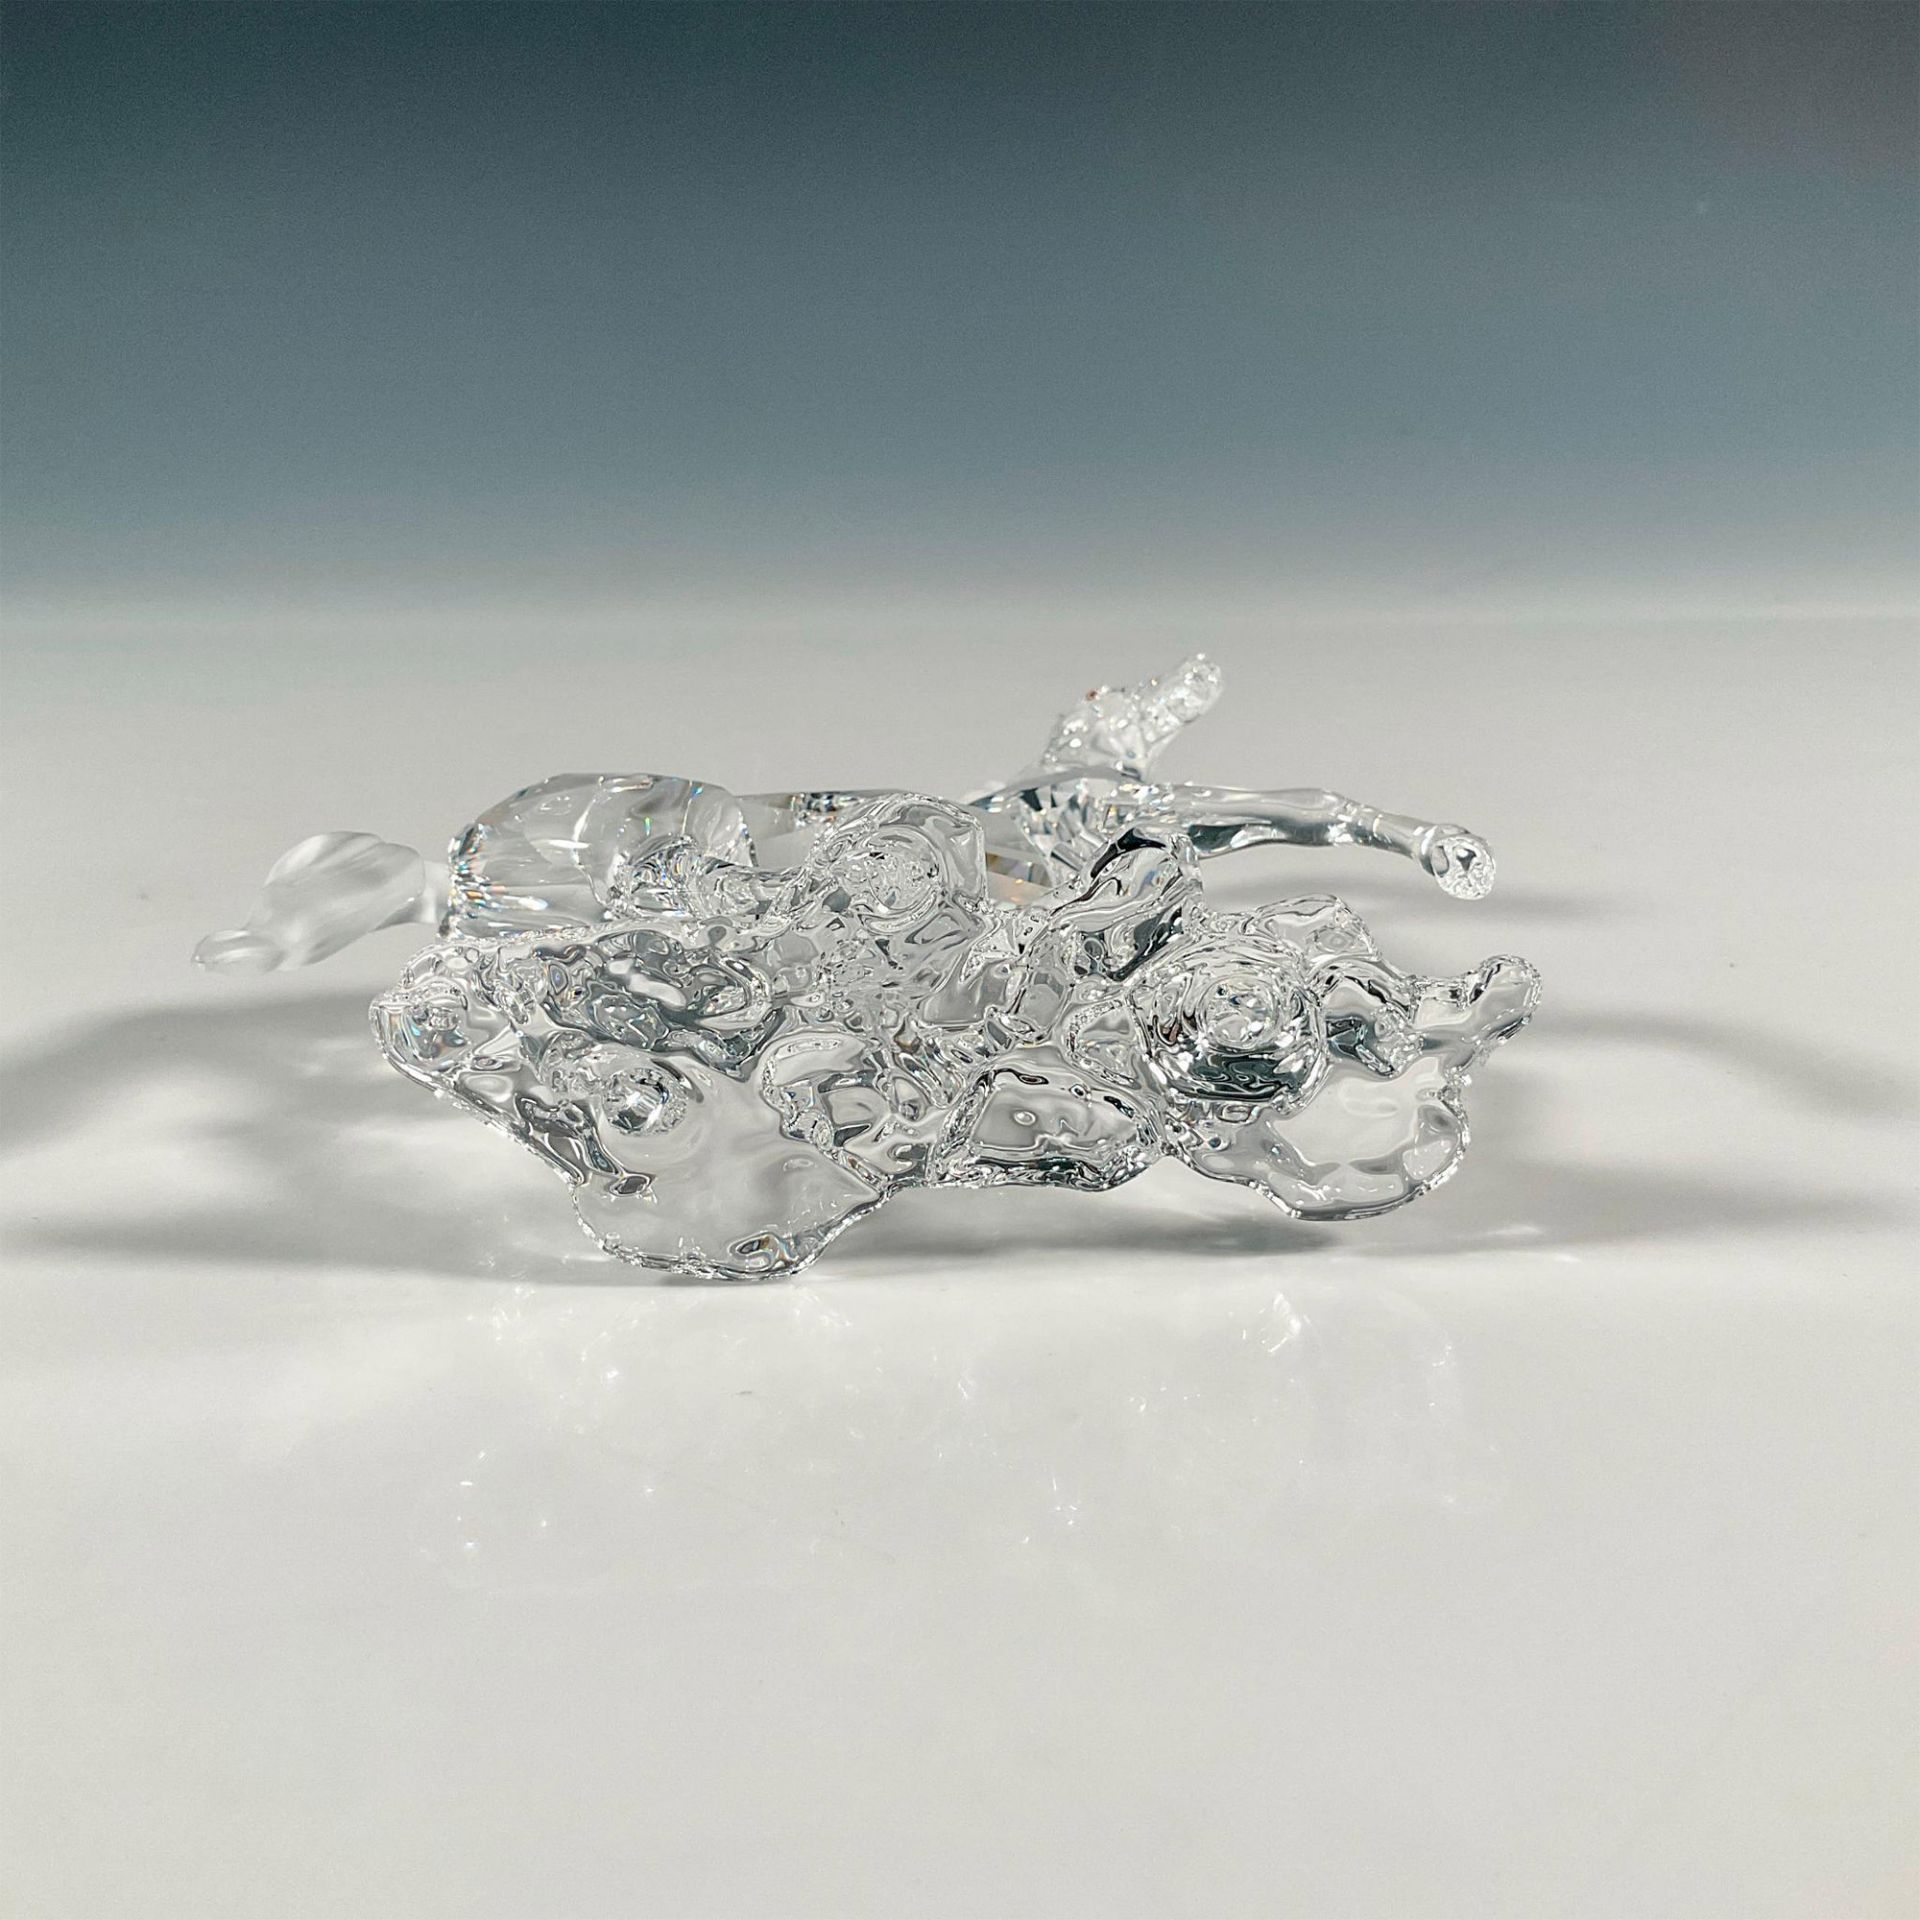 Swarovski Crystal Figurine, Stallion - Image 3 of 4